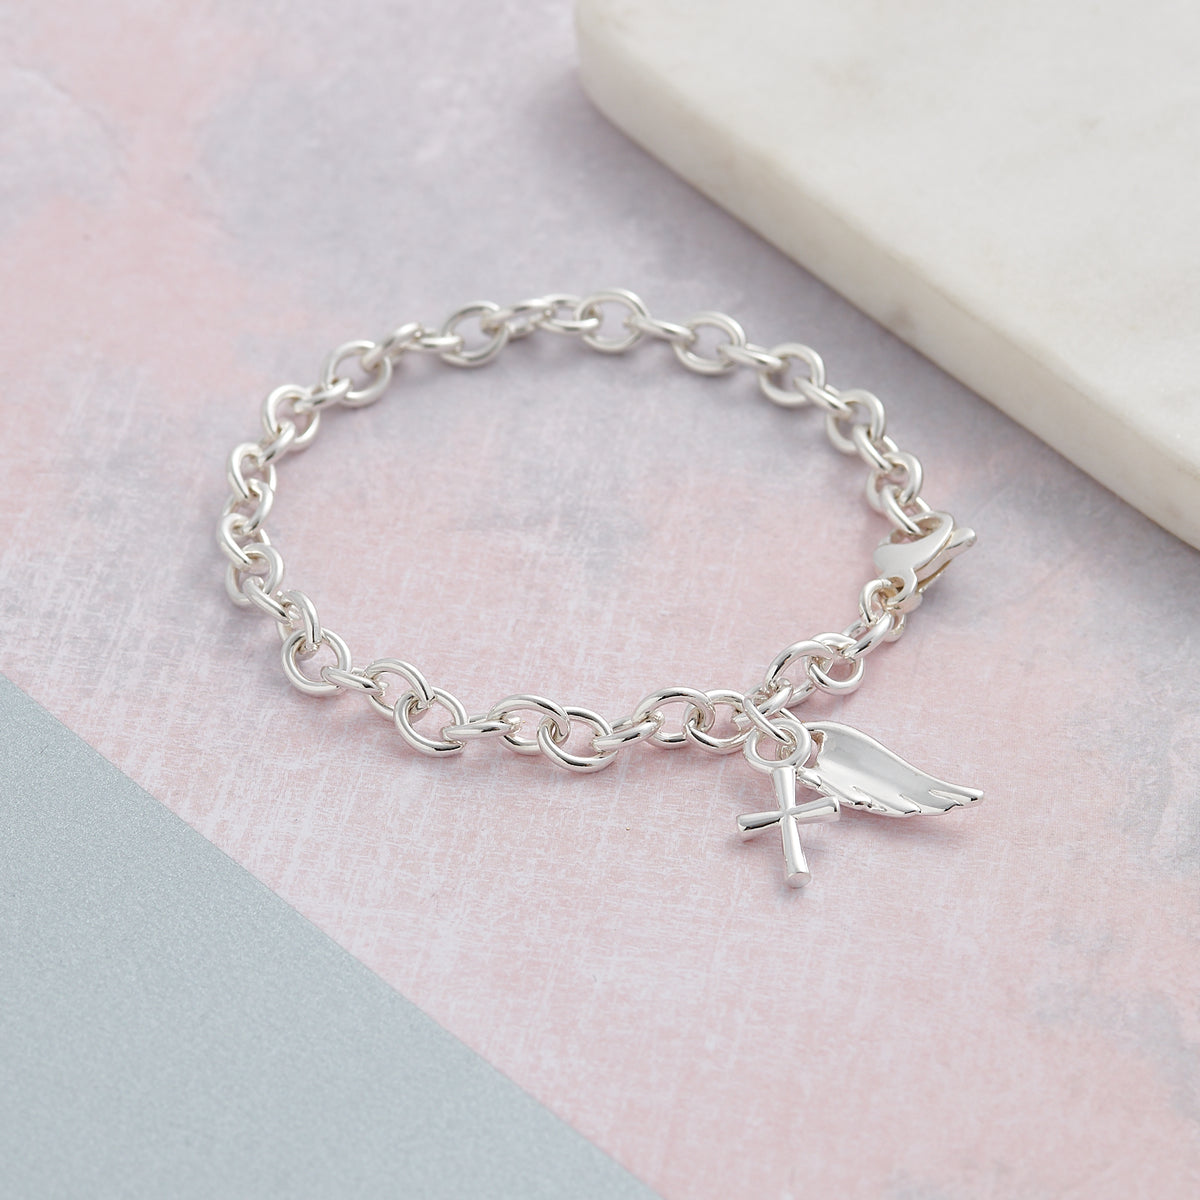 Solid sterling silver angel wing and cross christening charm bracelet designer Scarlett Jewellery